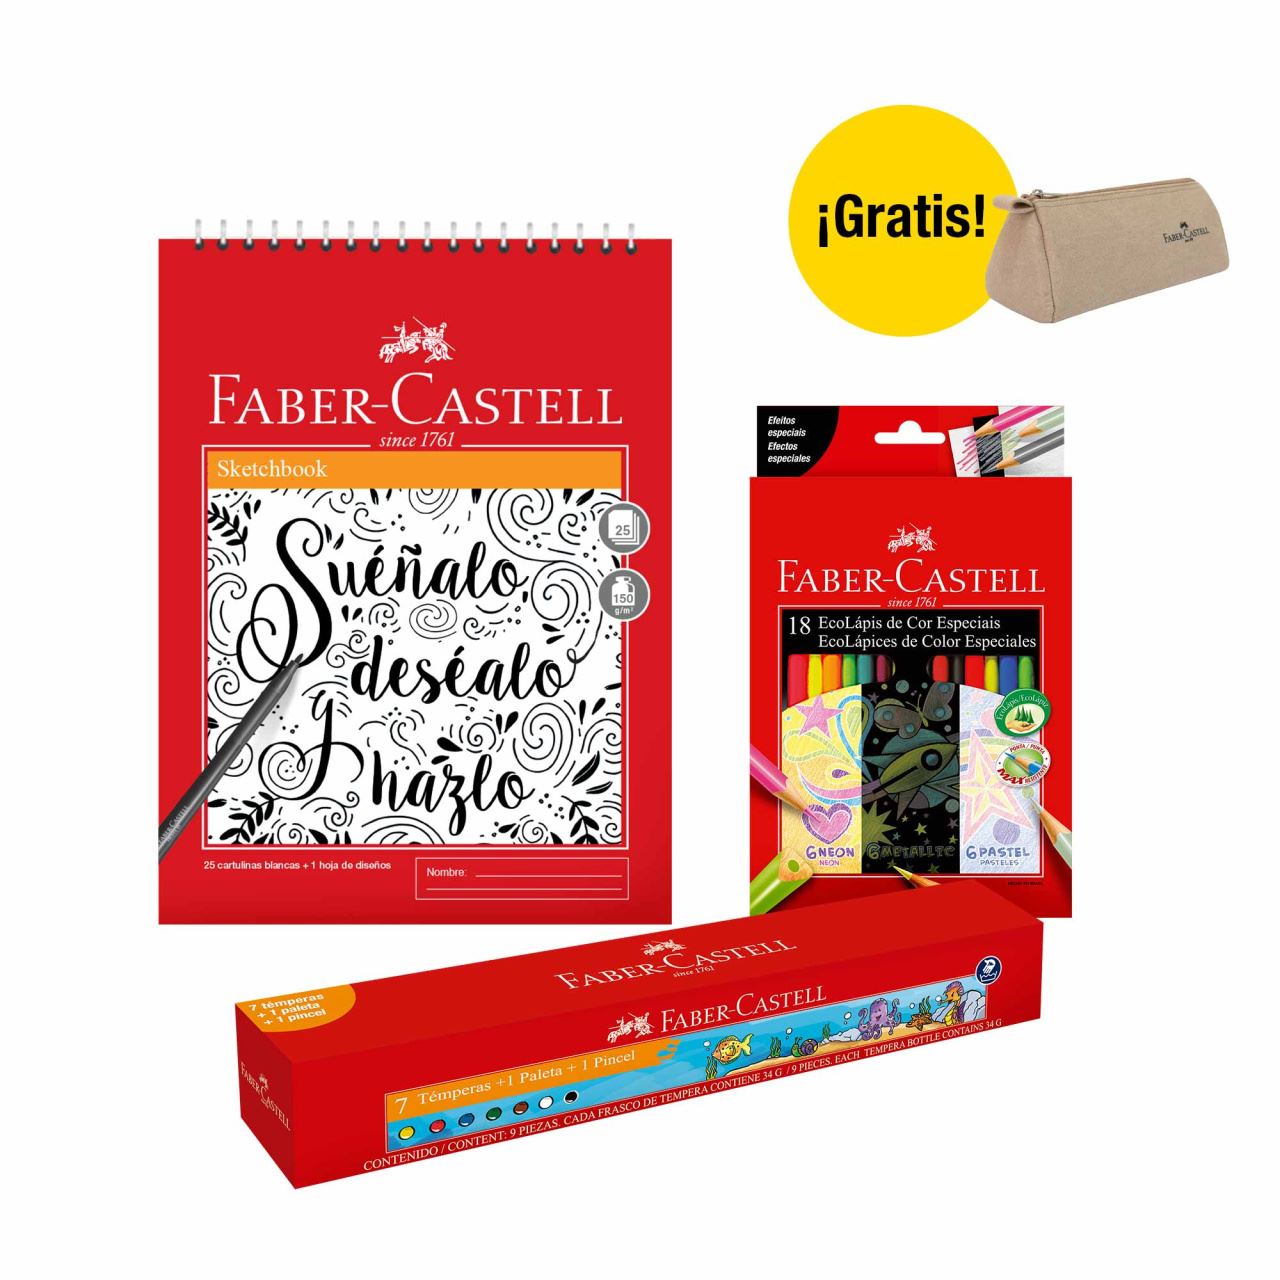 Faber-Castell - Pack Imagina